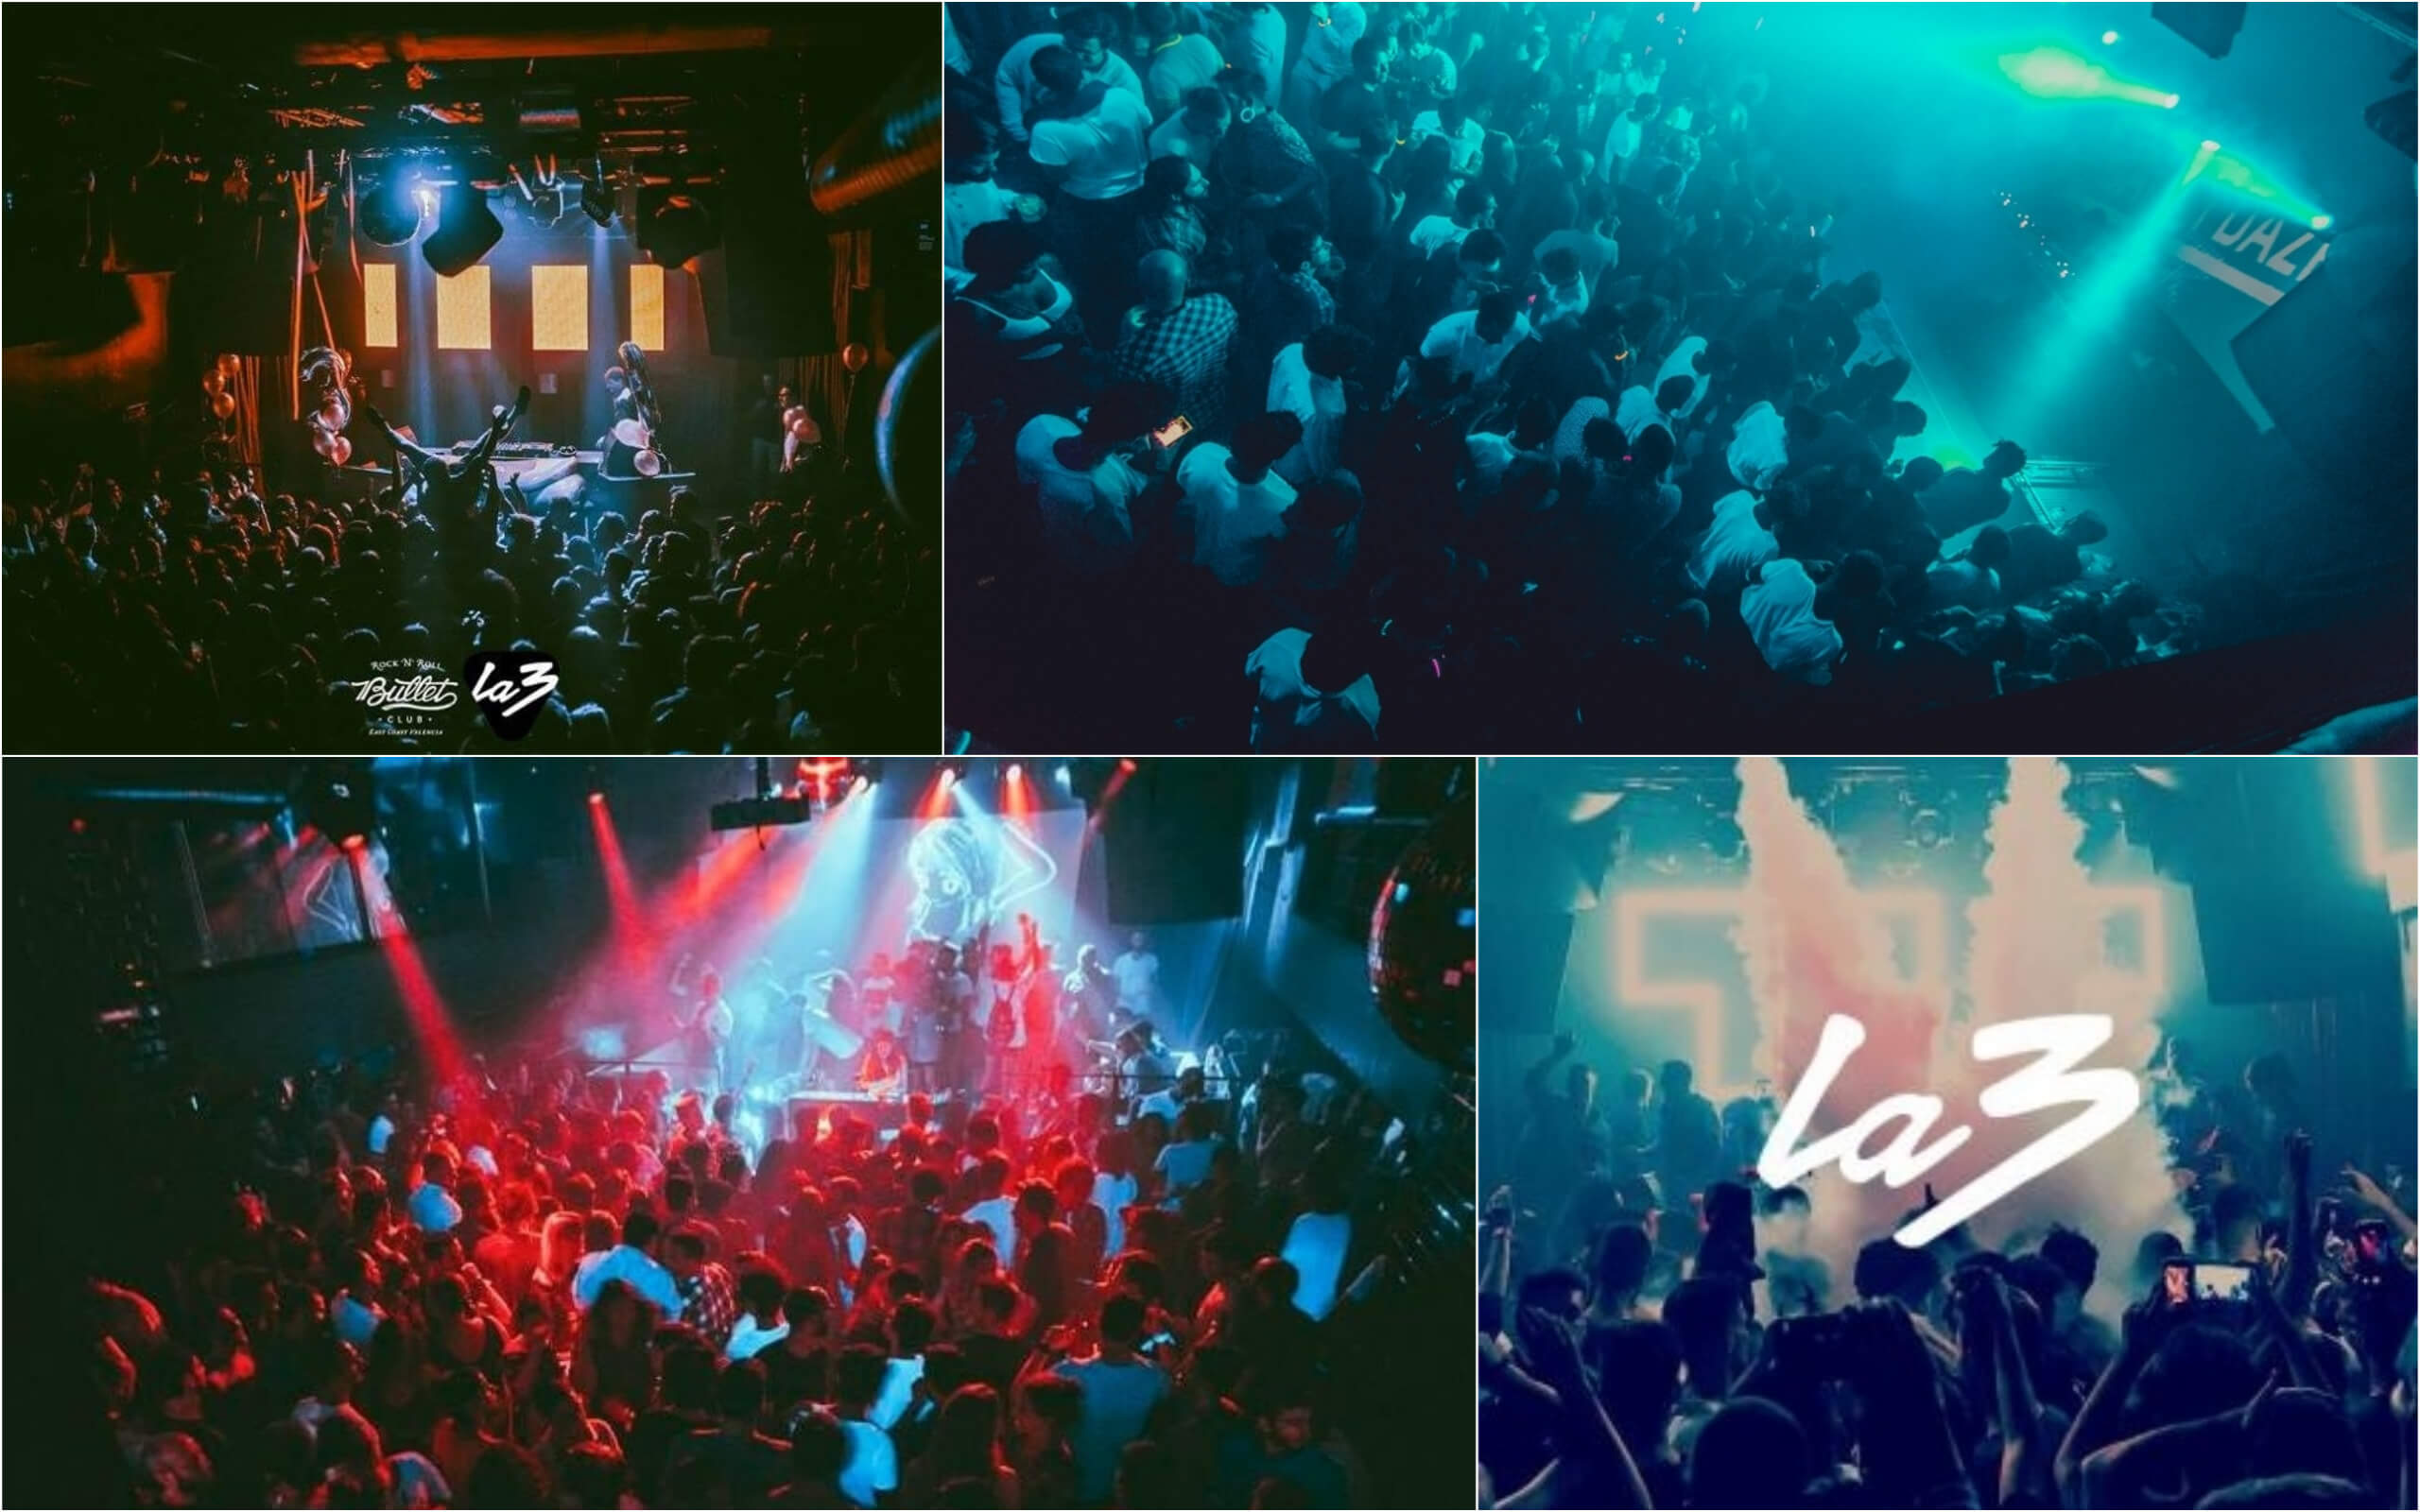 La3 Club дискотека, Дискотека Mya, L’Umbracle дискотека-терраса, Agenda Club студенческая дискотека в Валенсии